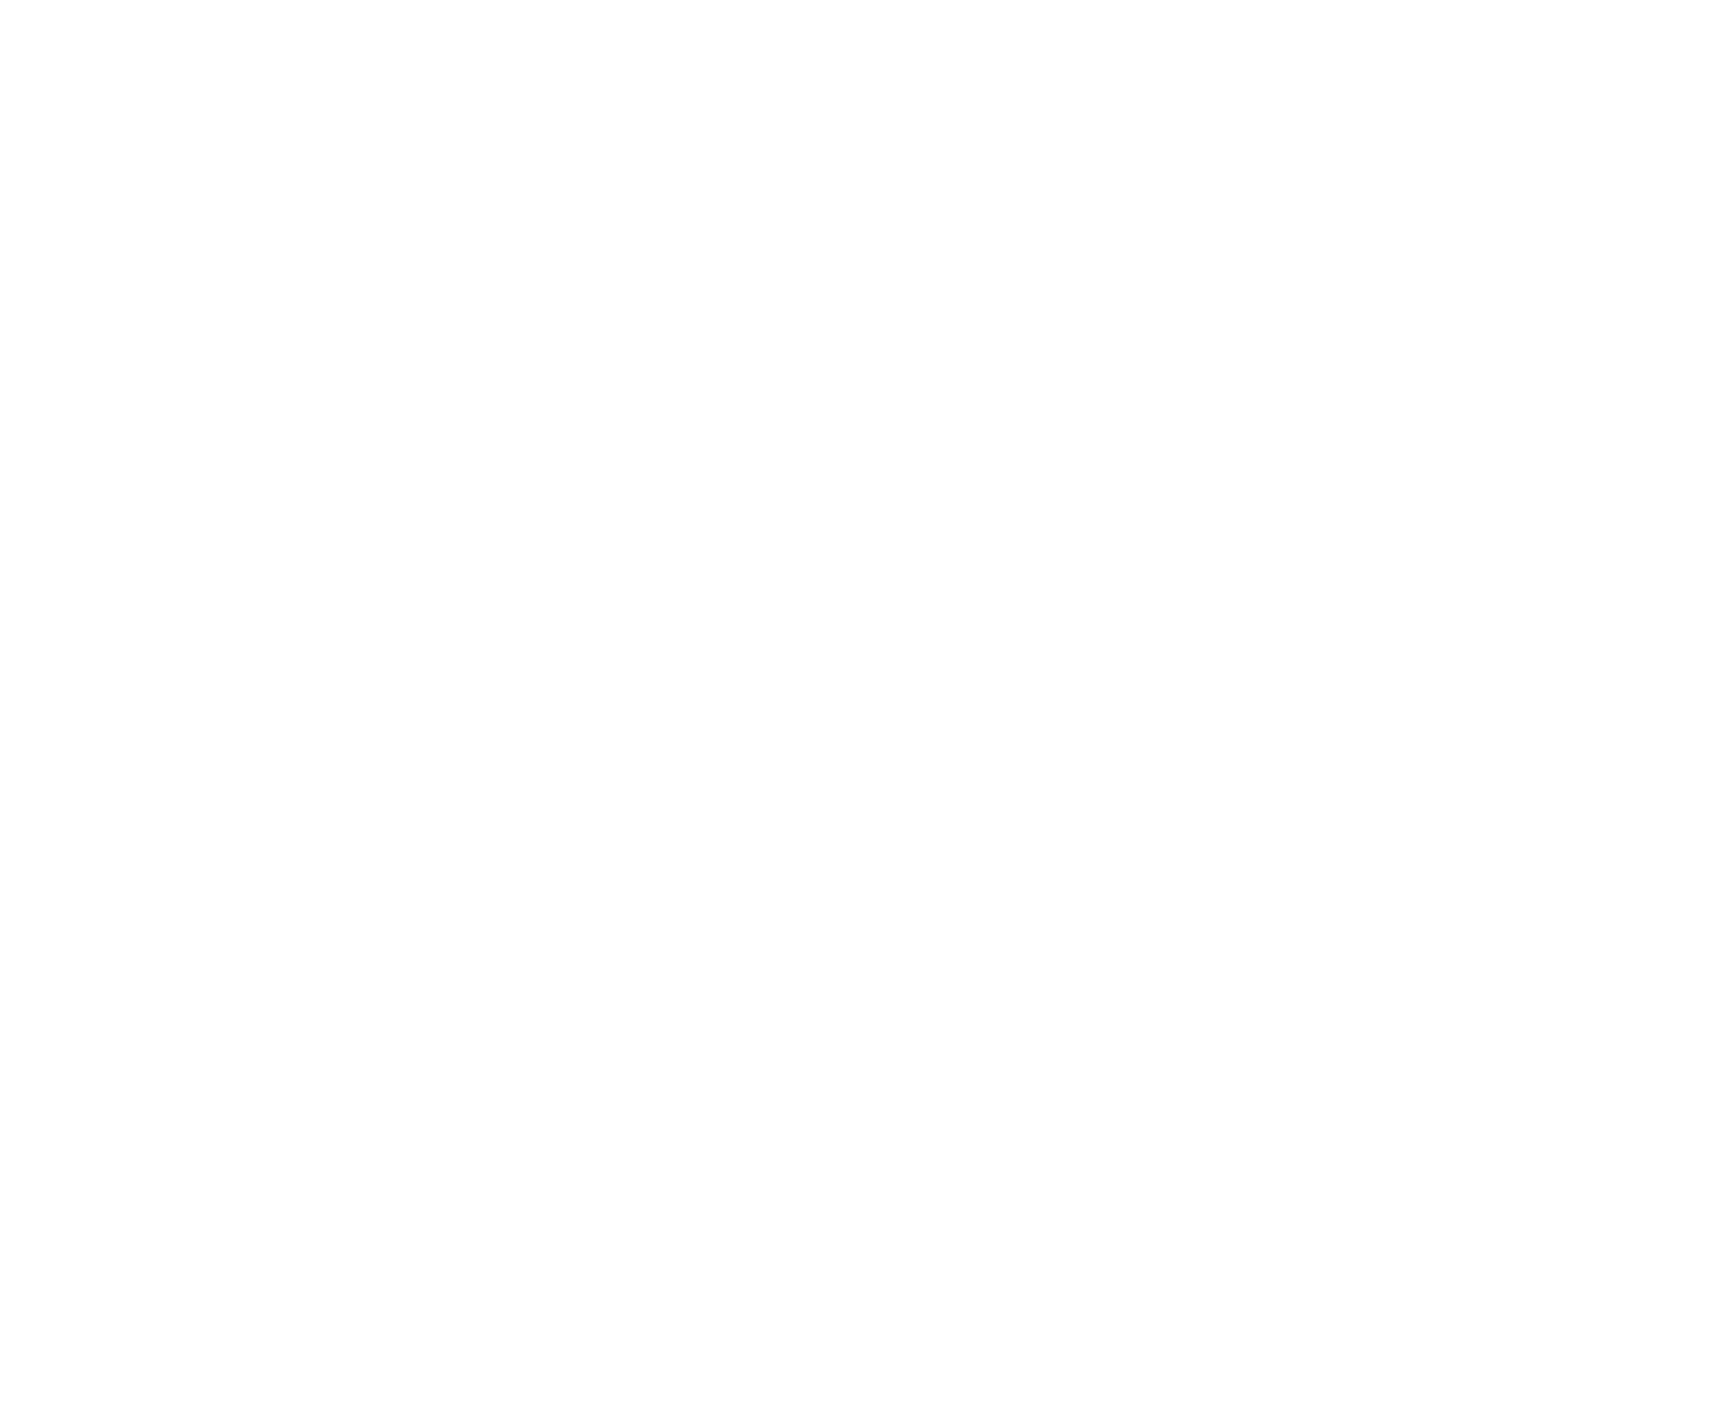 Beer Smiley Face Logo